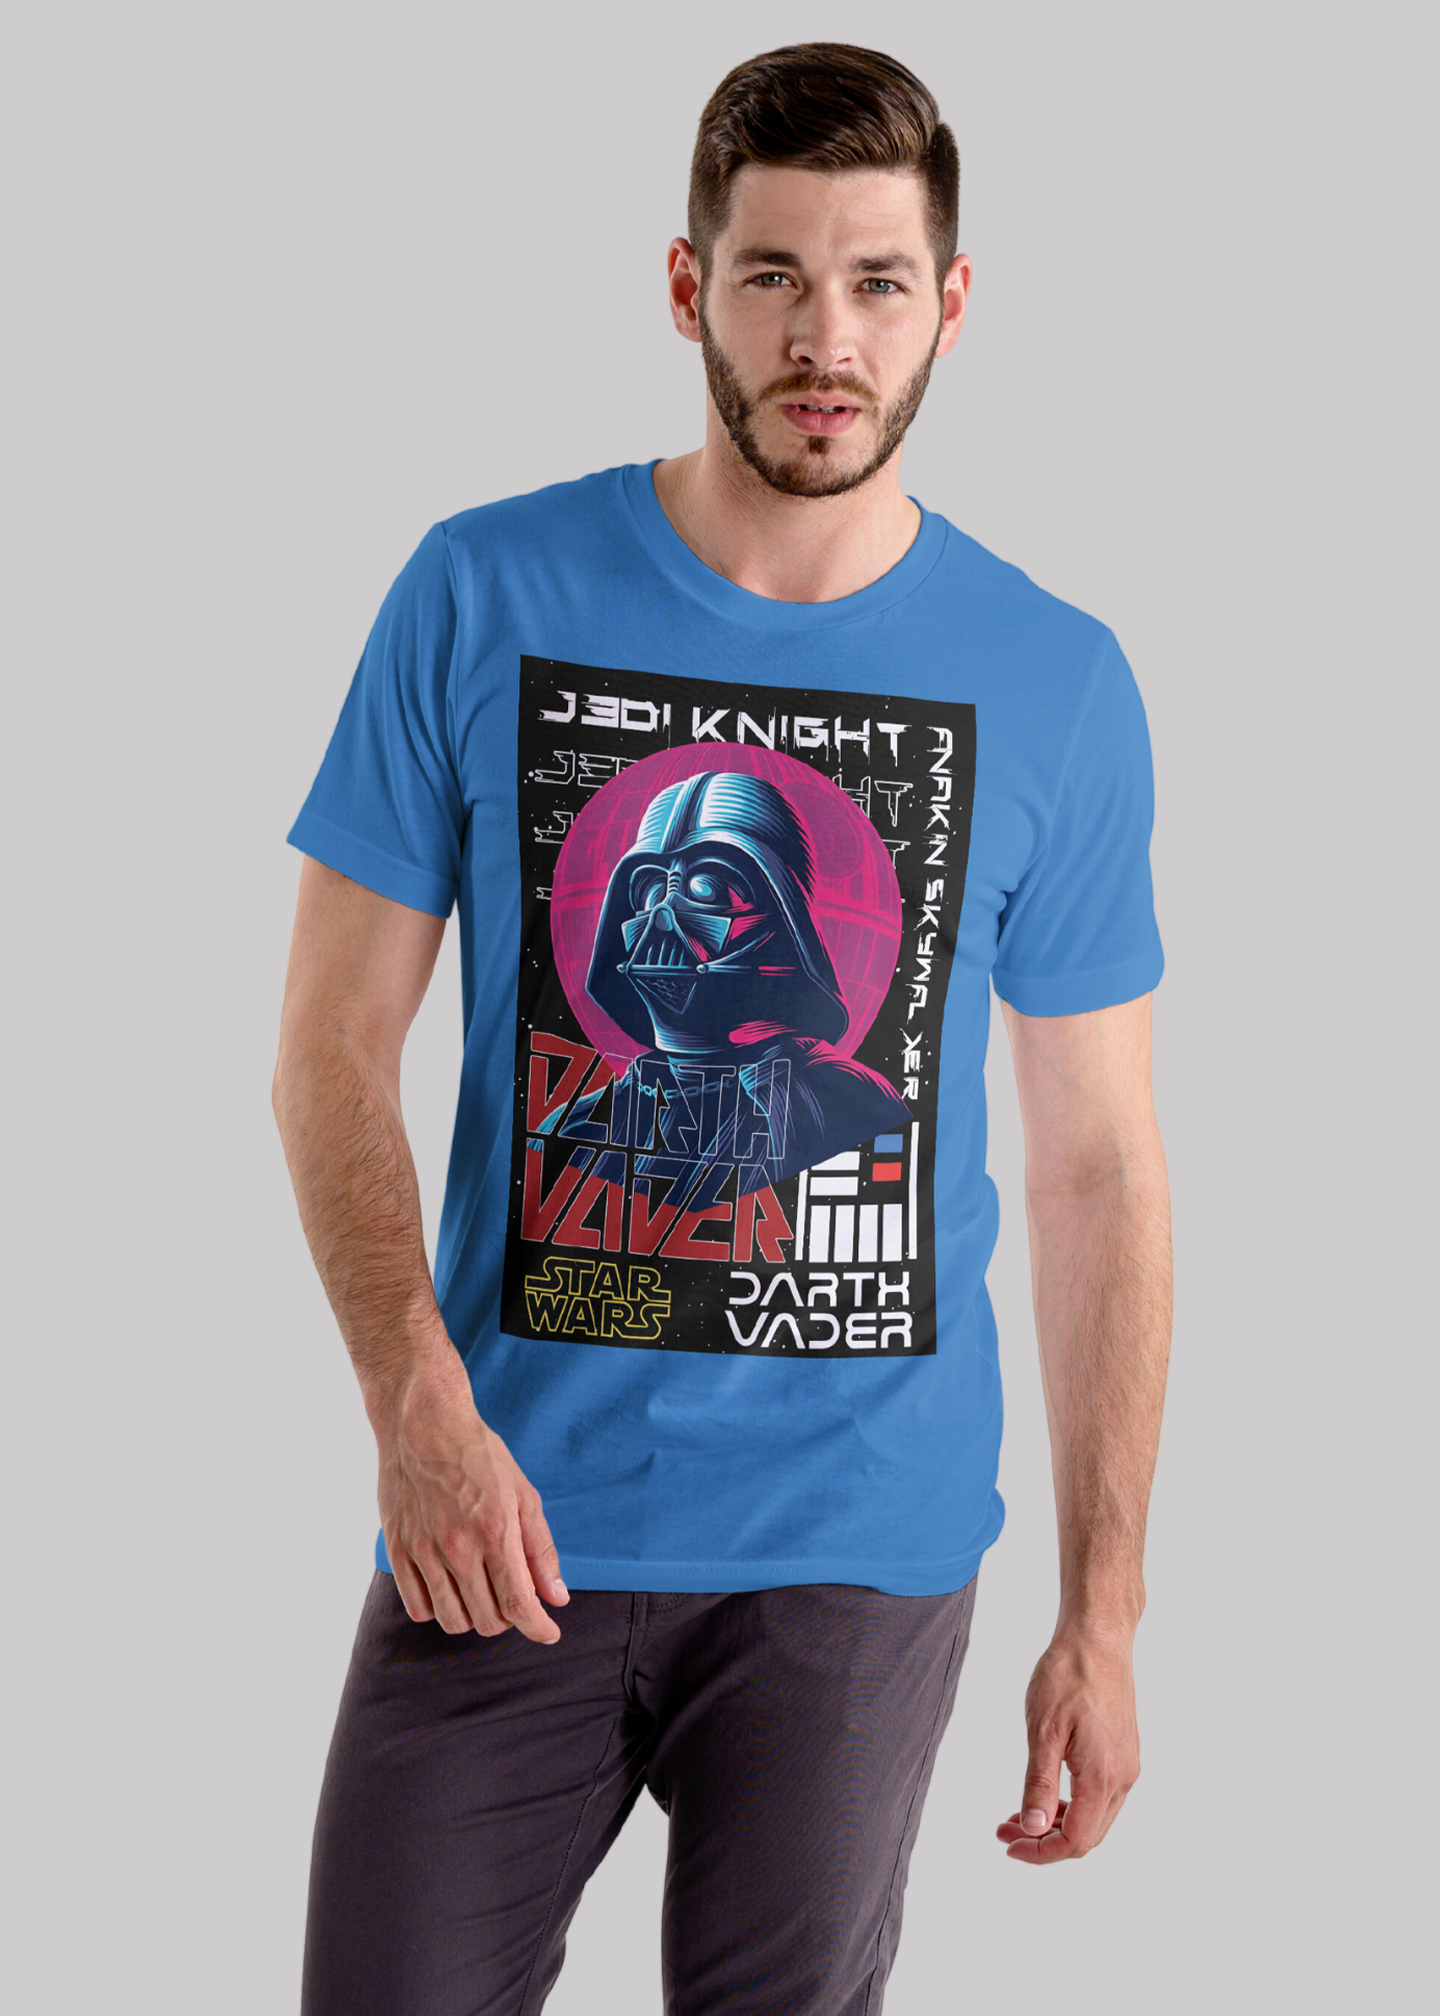 Star wars darth vader Printed Half Sleeve Premium Cotton T-shirt For Men